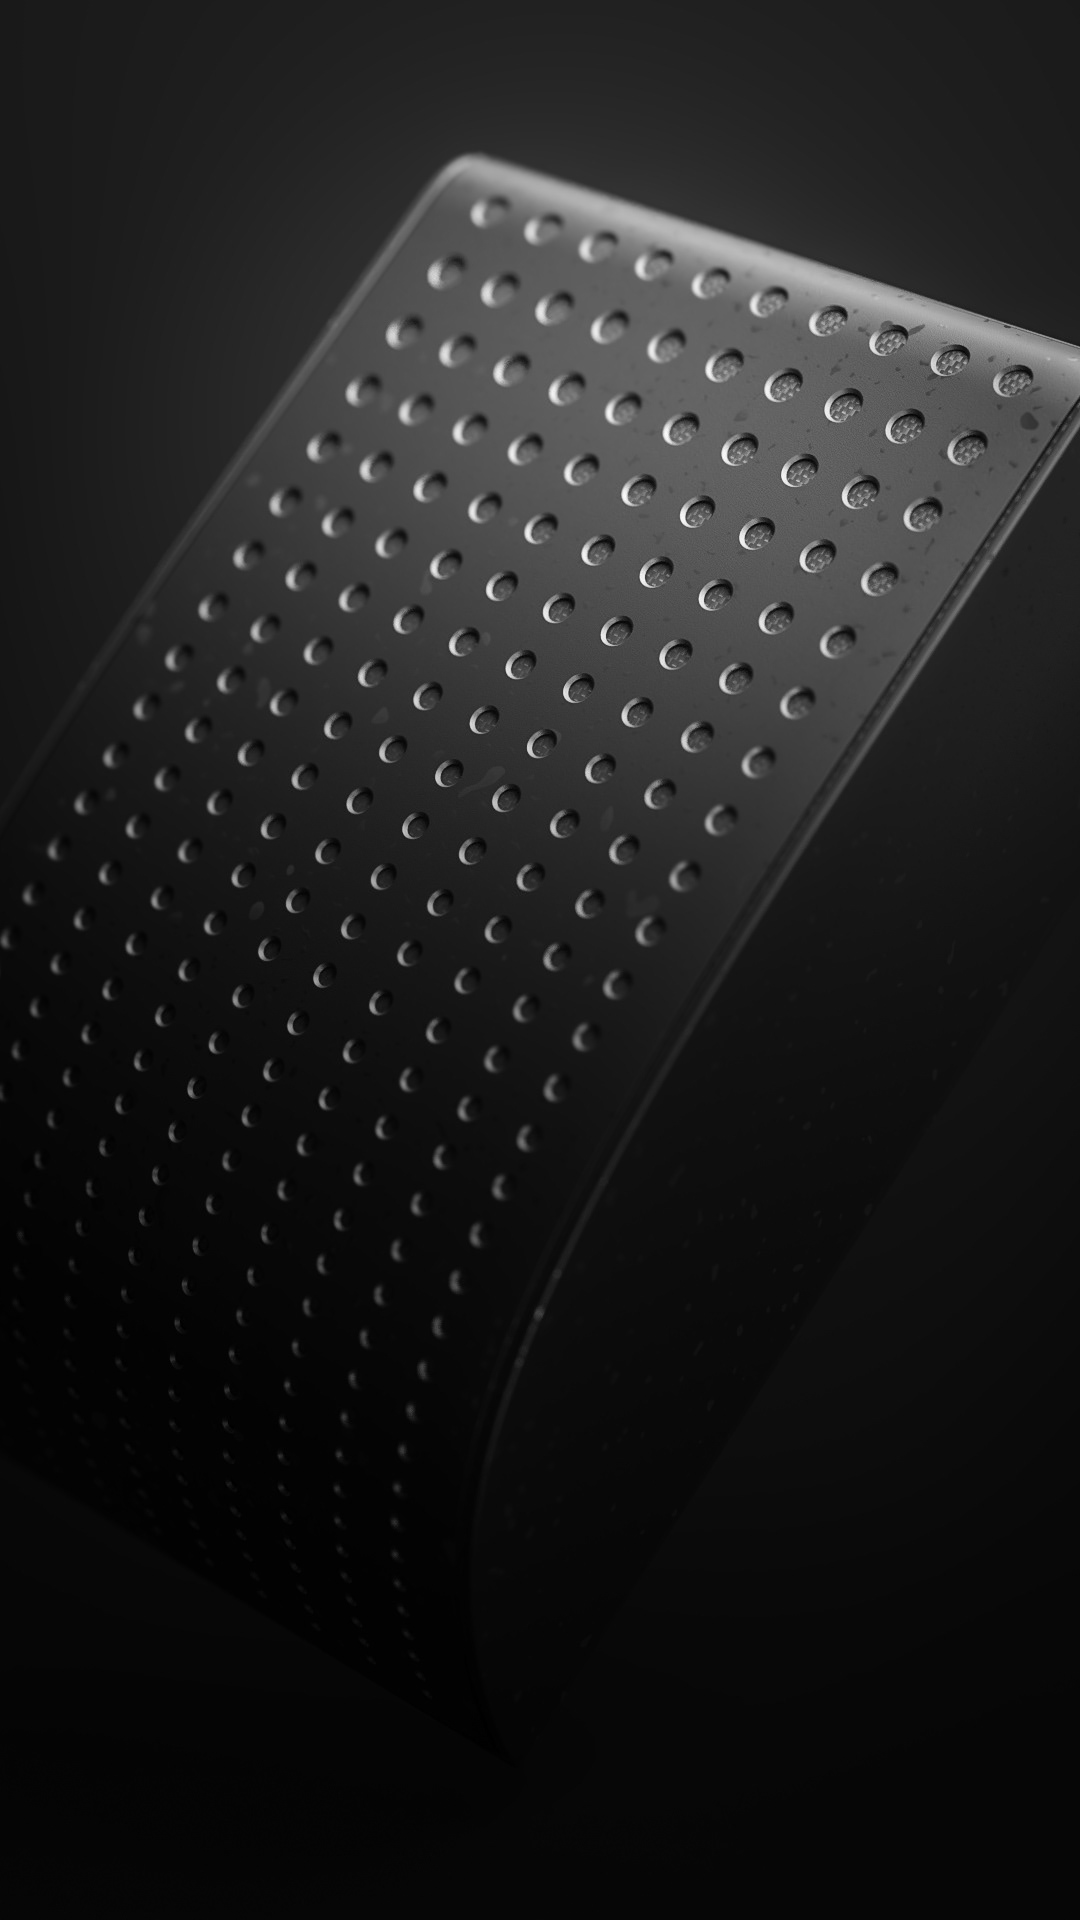 bluetooth speaker Render dark LOW key light Spots dots holes